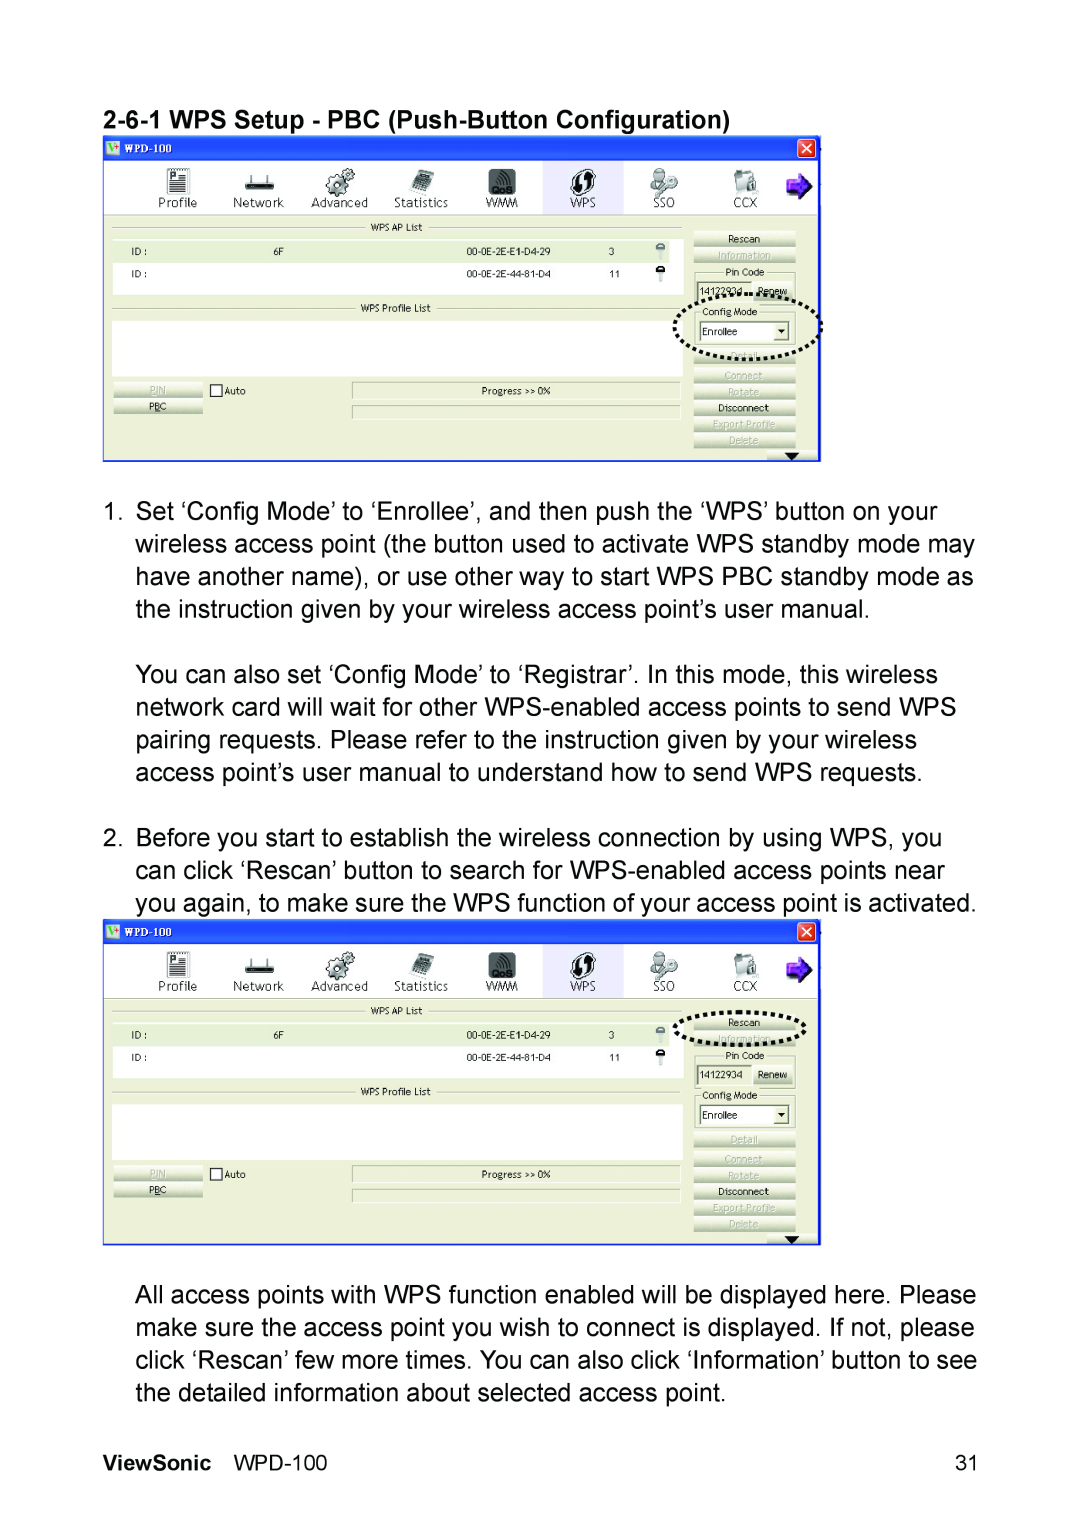 ViewSonic VS13789 manual 2-6-1WPS Setup - PBC Push-ButtonConfiguration 